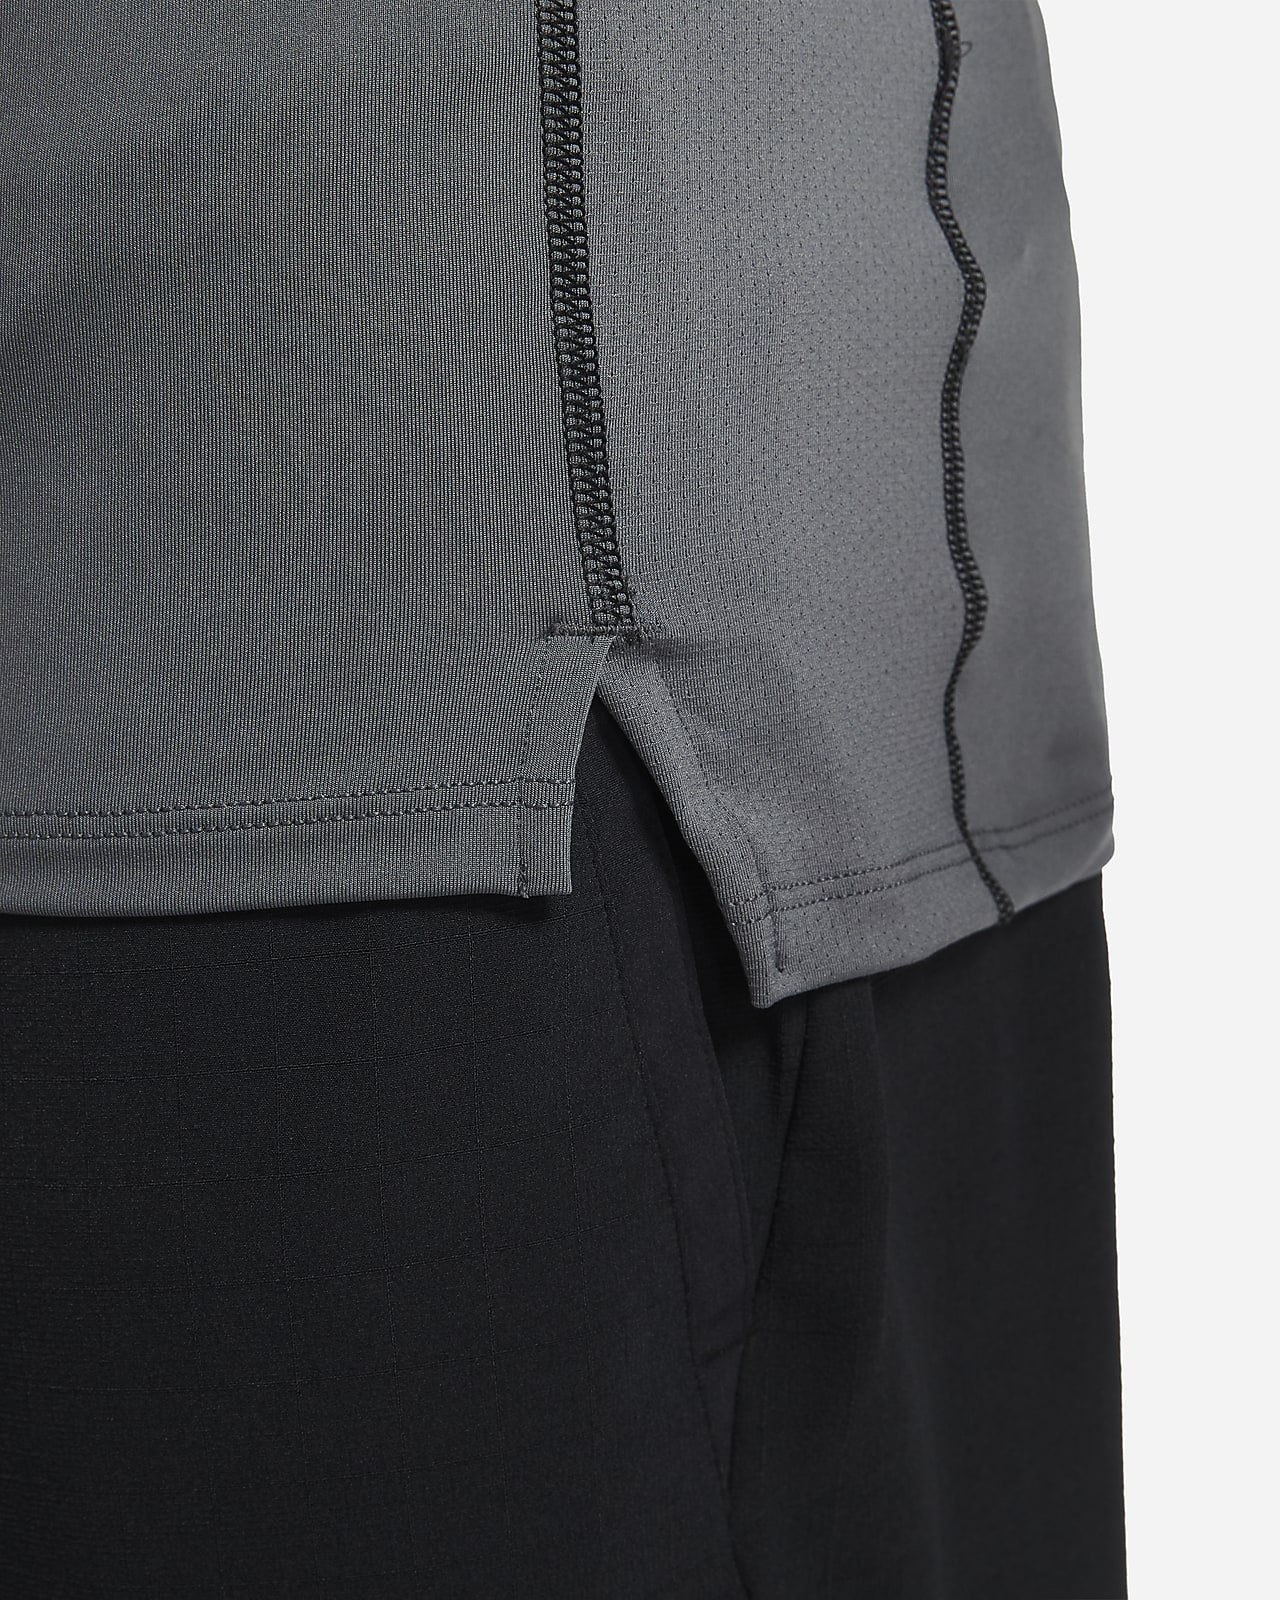 Nike Pro Combat Hyperwarm Fitted Shirt Mens Small Blue Long Sleeve DriFit